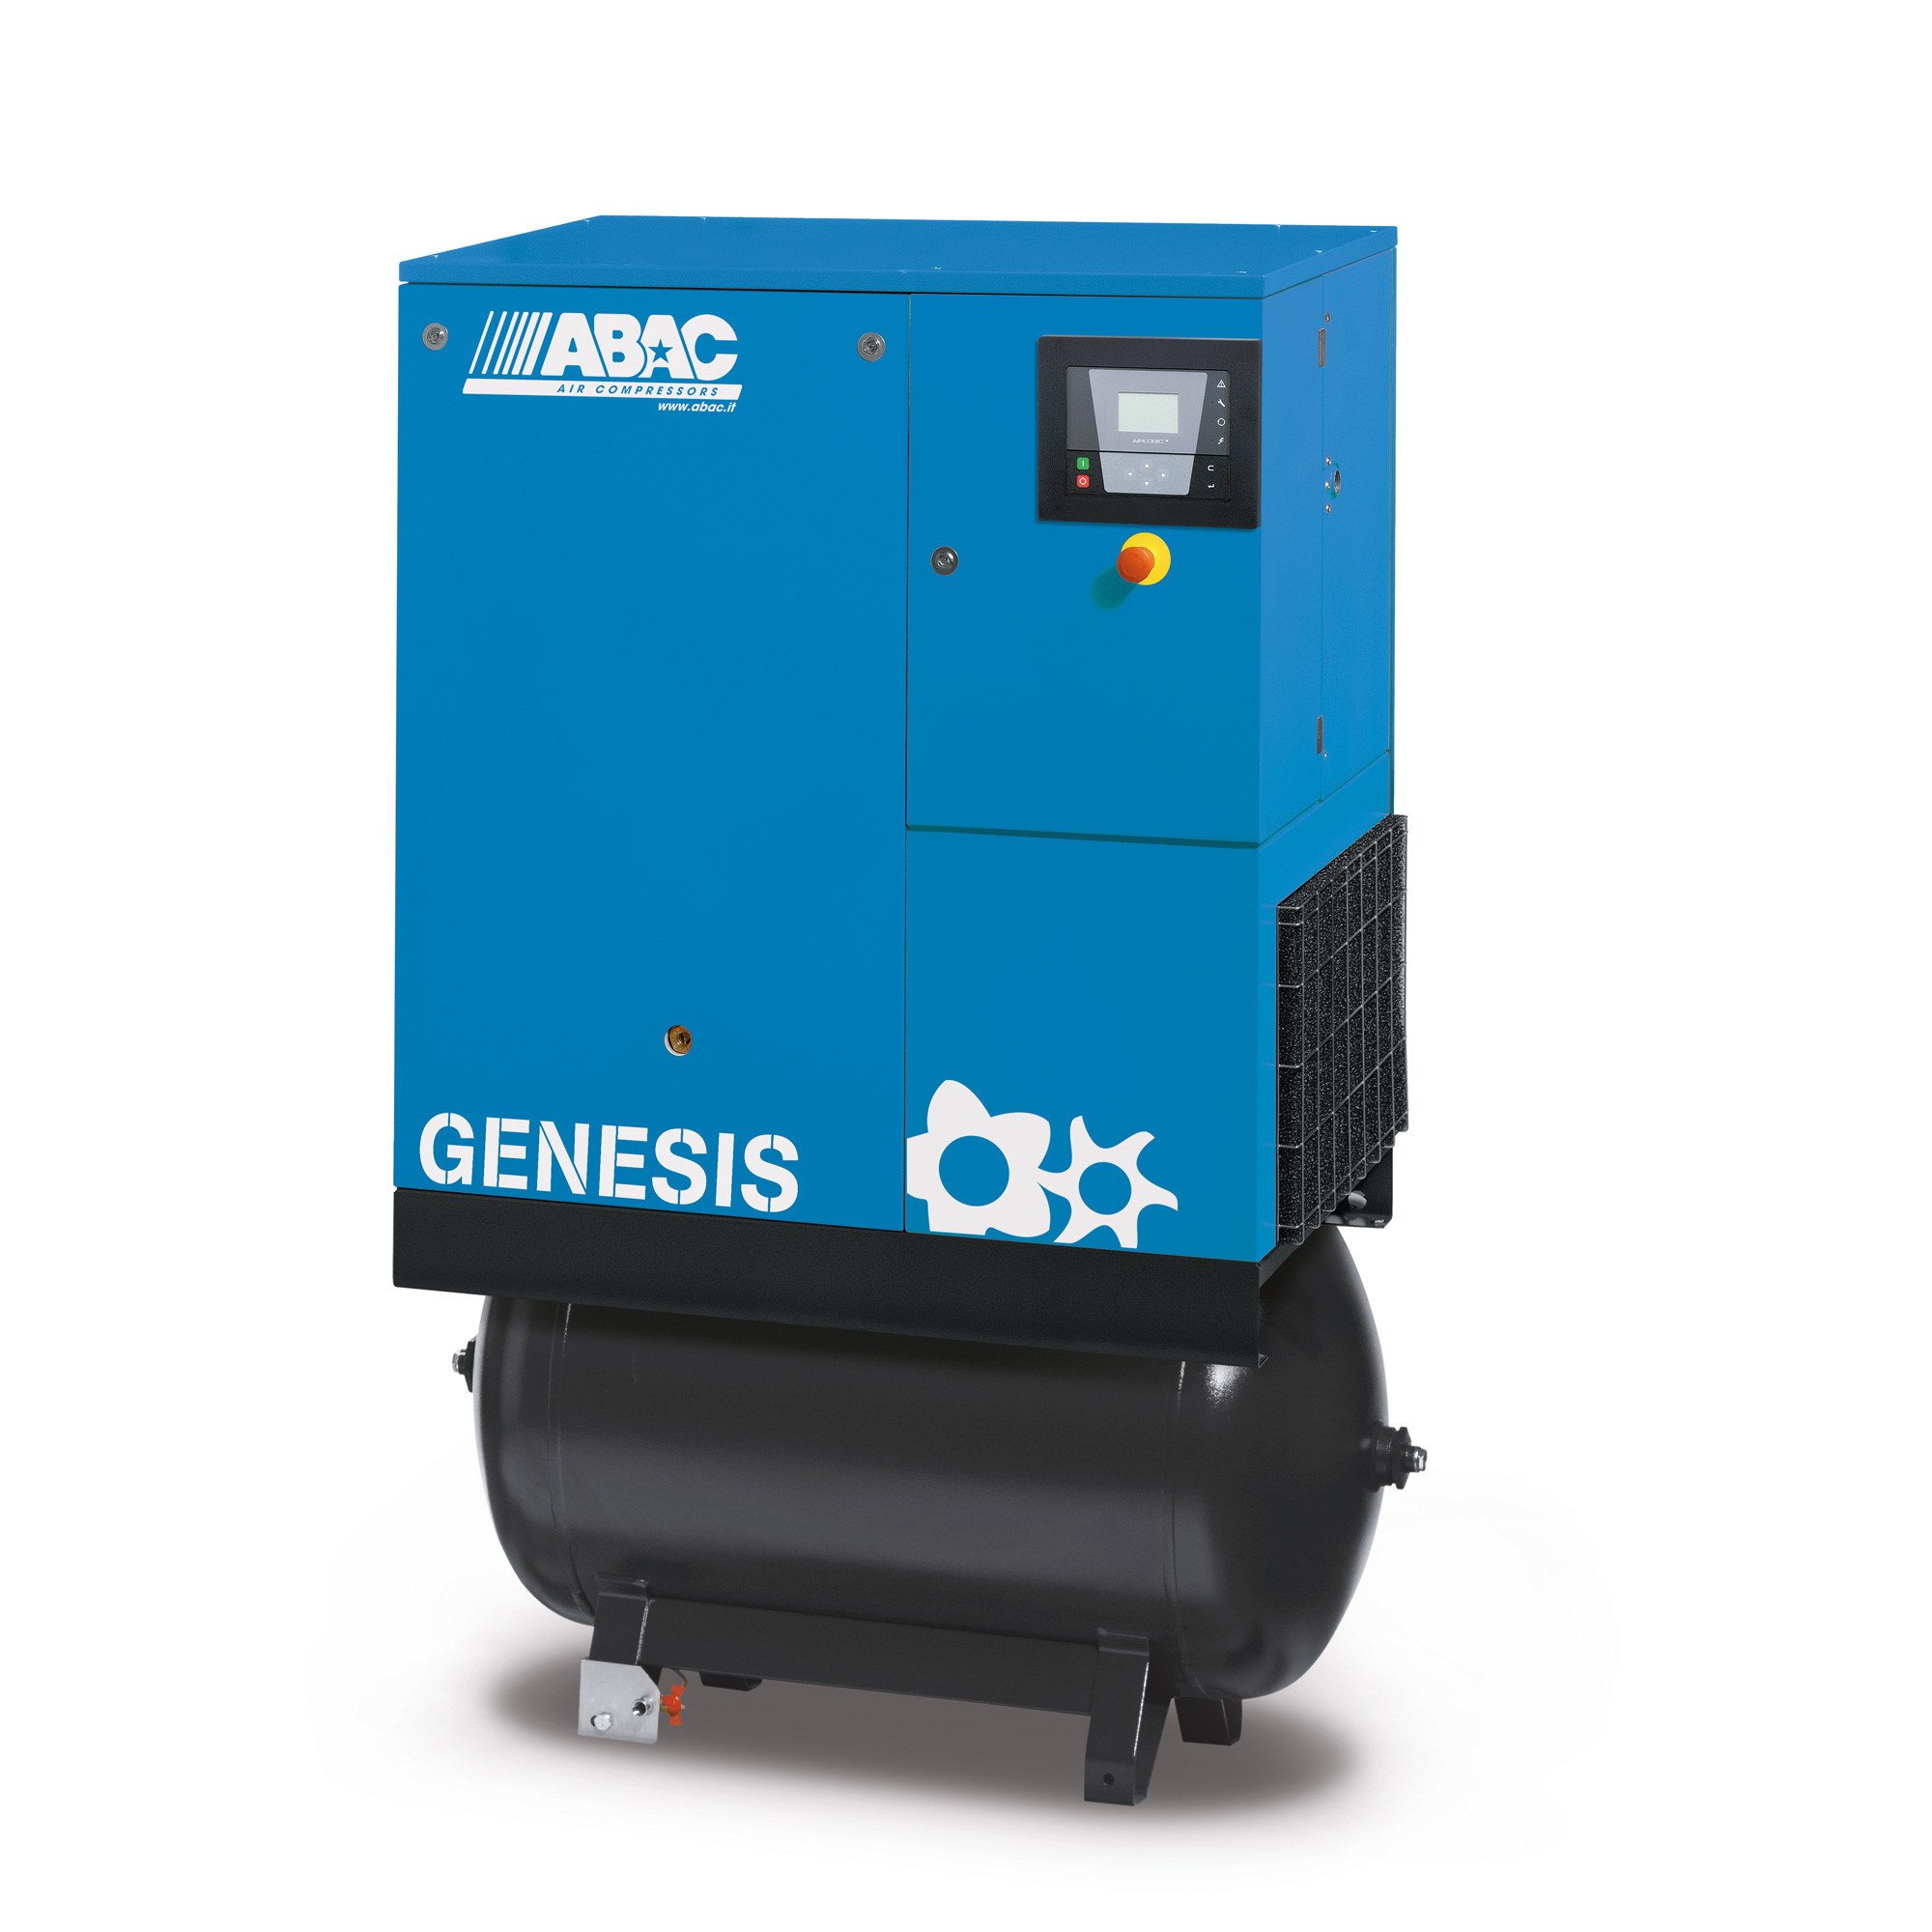 ABAC Genesis 270L, 58.8 CFM 11千瓦固定转速螺杆空压机